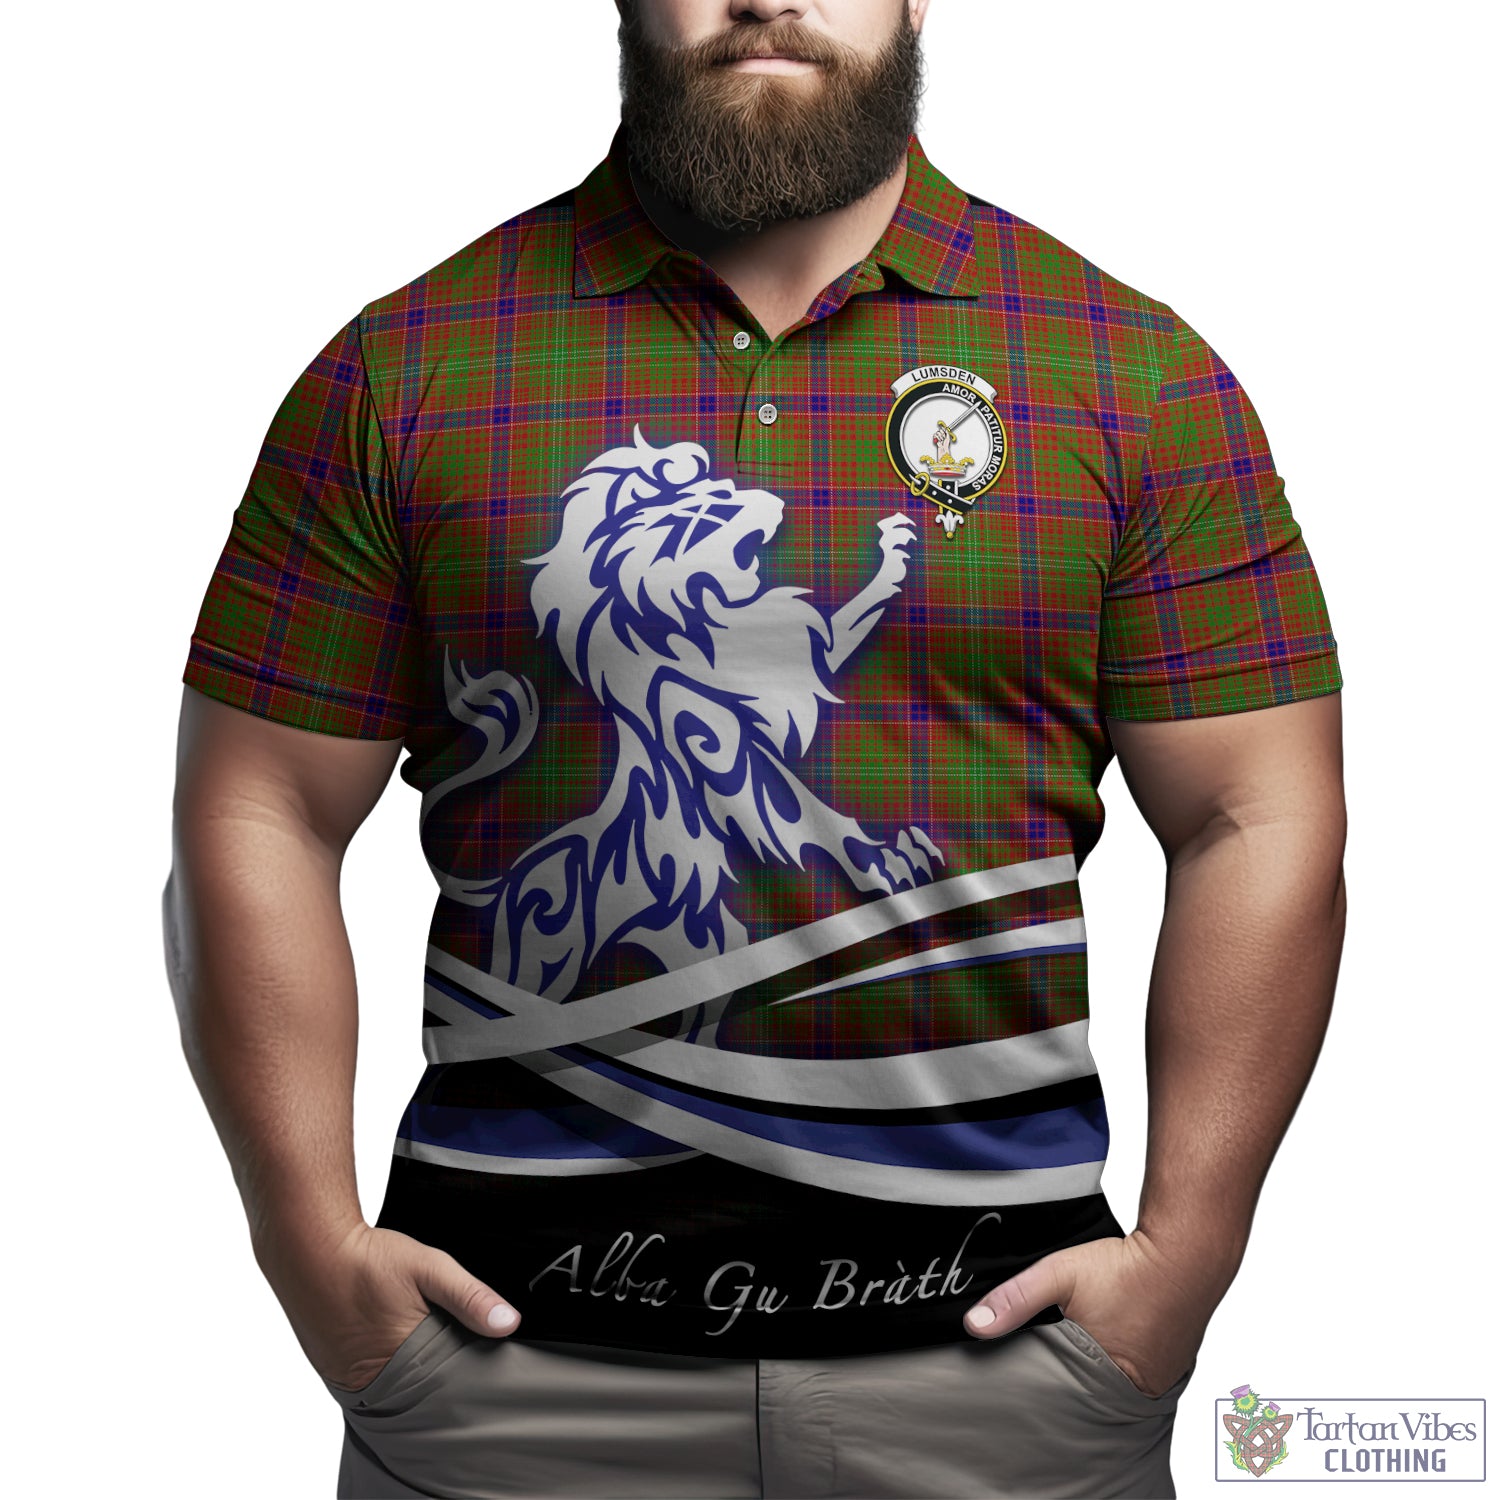 lumsden-tartan-polo-shirt-with-alba-gu-brath-regal-lion-emblem